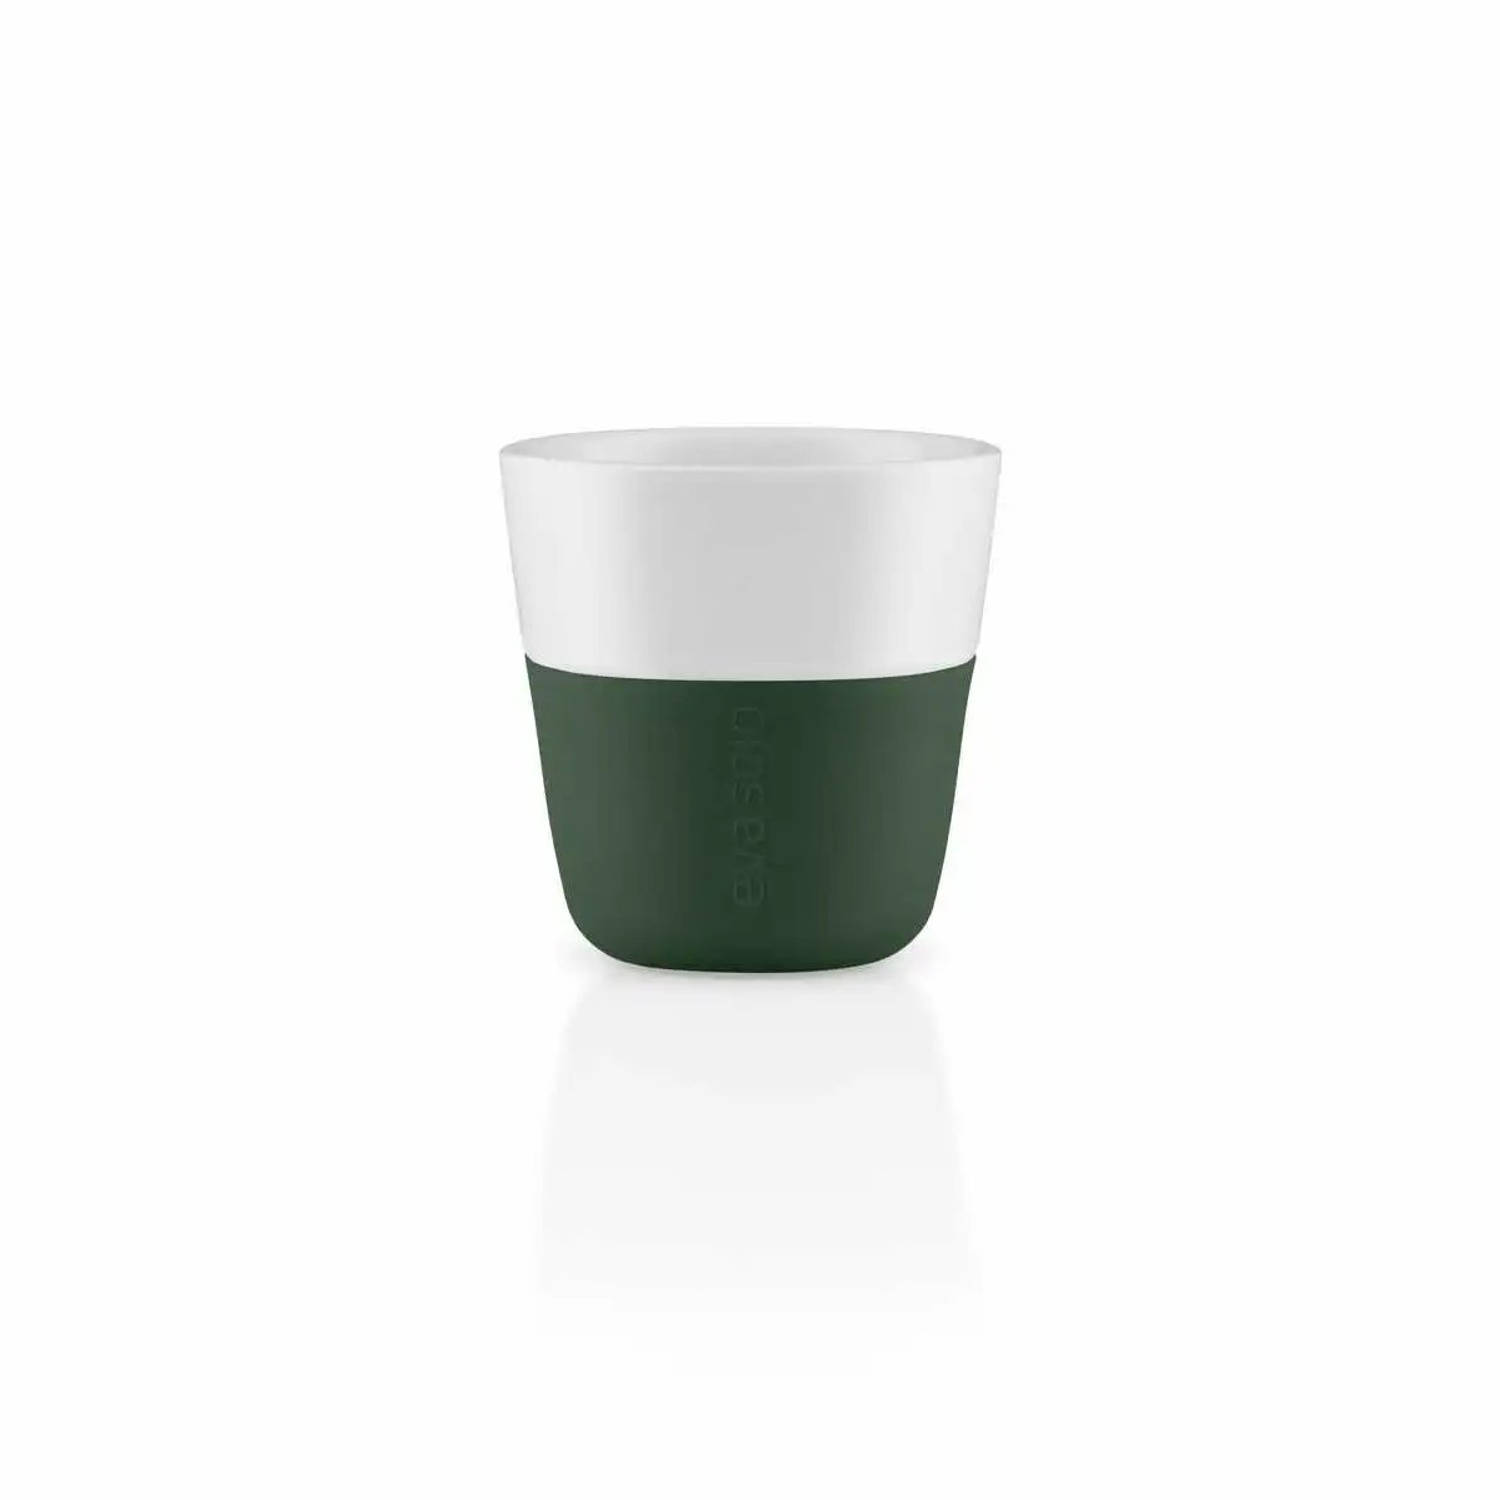 Eva Solo - Espresso Kop, Mok, Set van 2 Stuks, 80 ml, Emerald Groen - Eva Solo